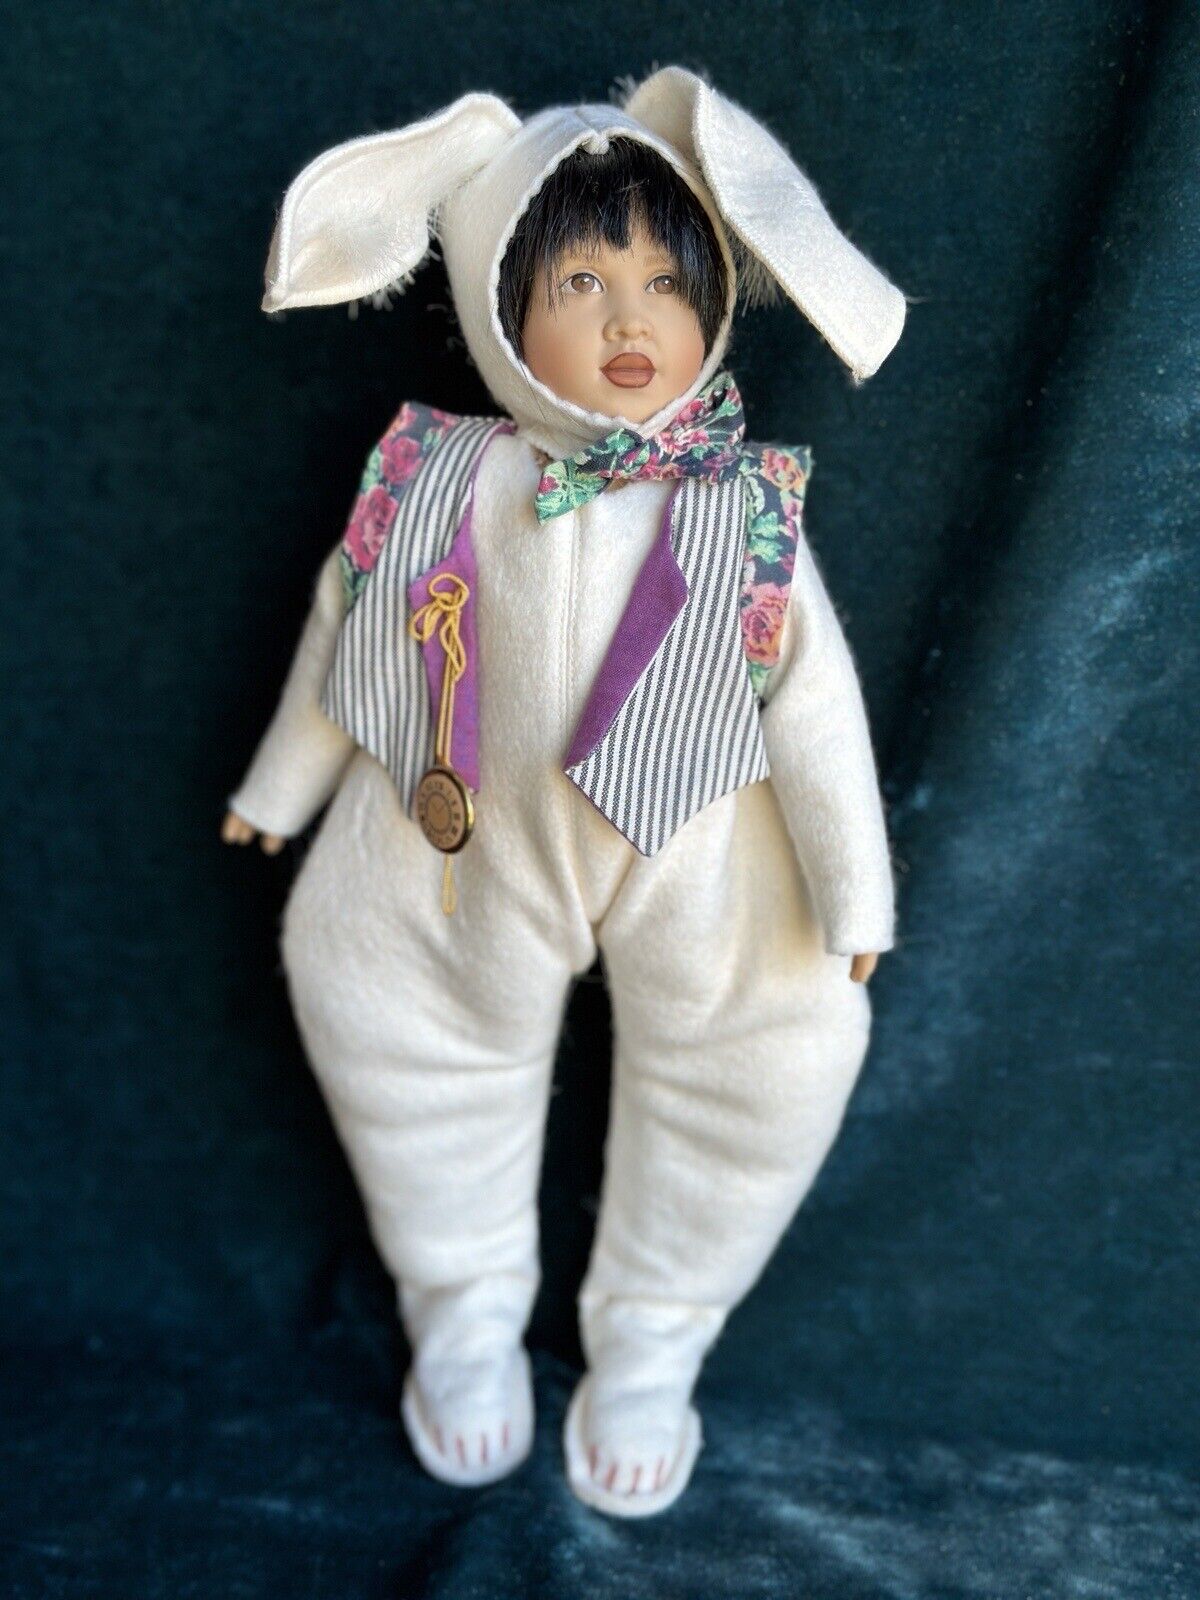 Collectible Vinyl 12” Helen Kish White Rabbit Doll LE 500